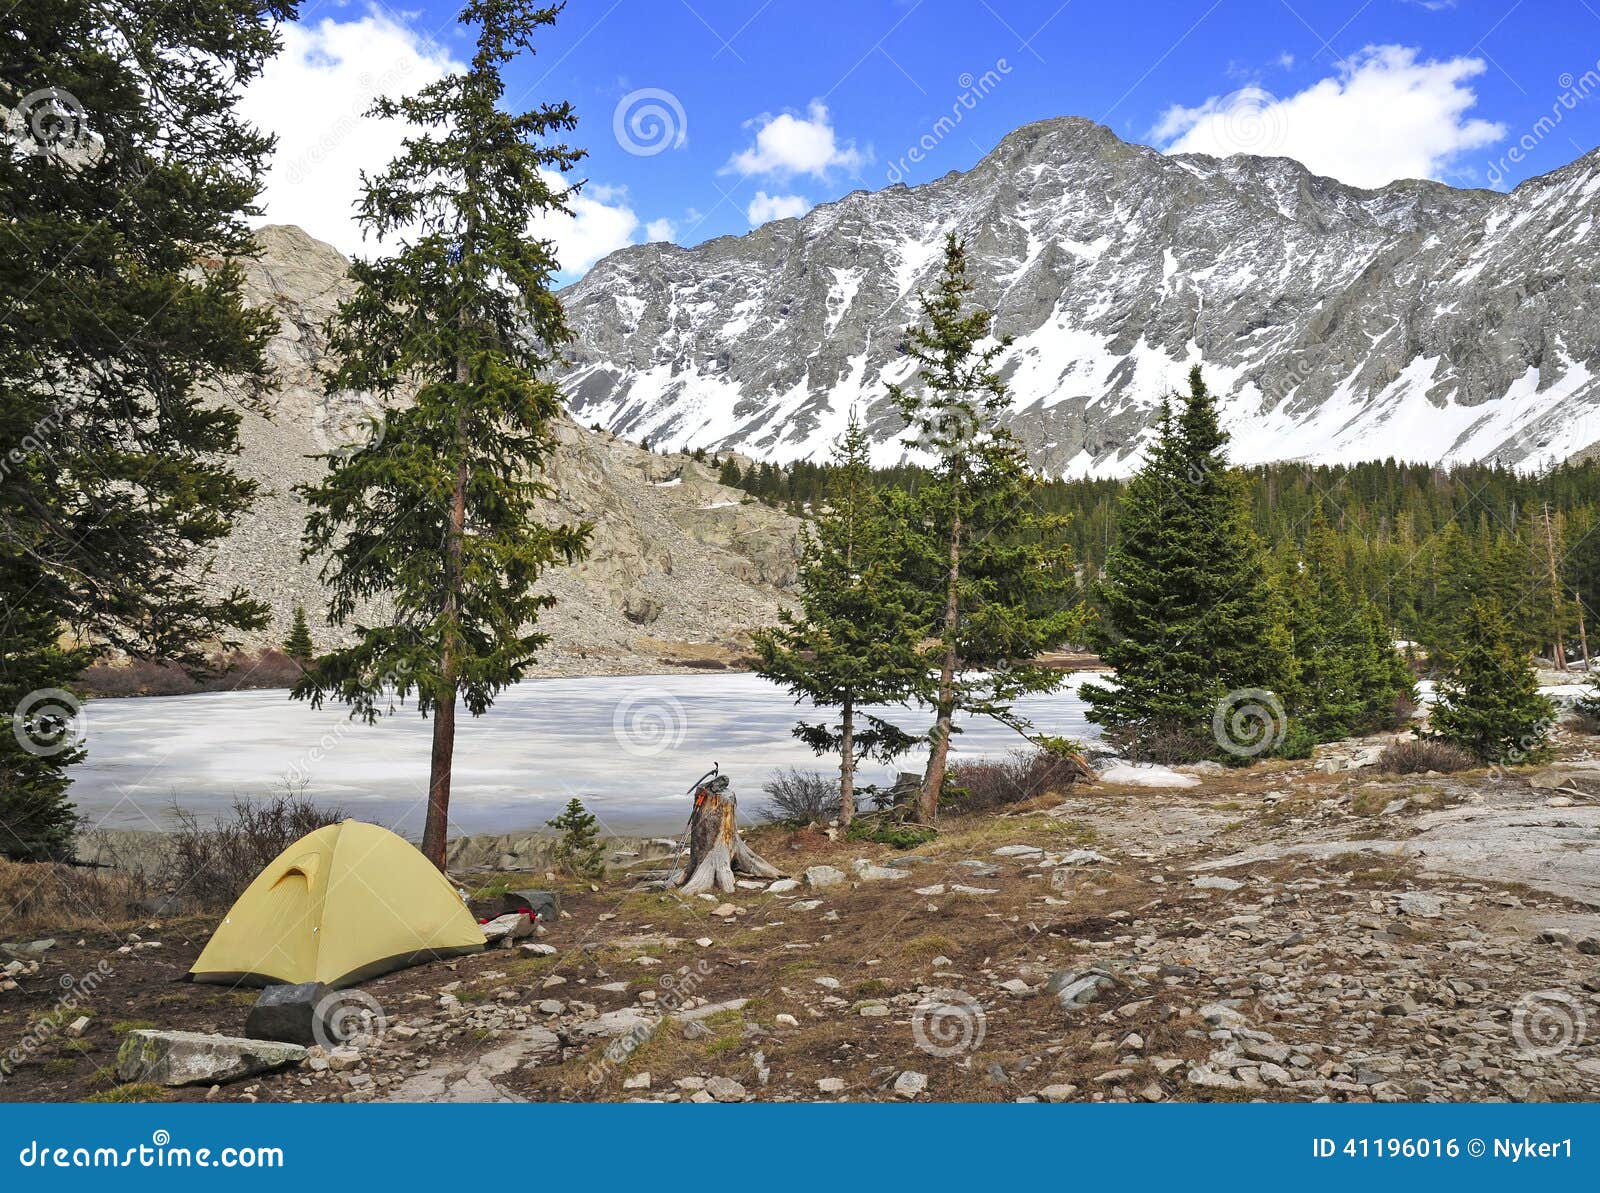 camping with tent at little bear peak, sangre de cristo range, colorado